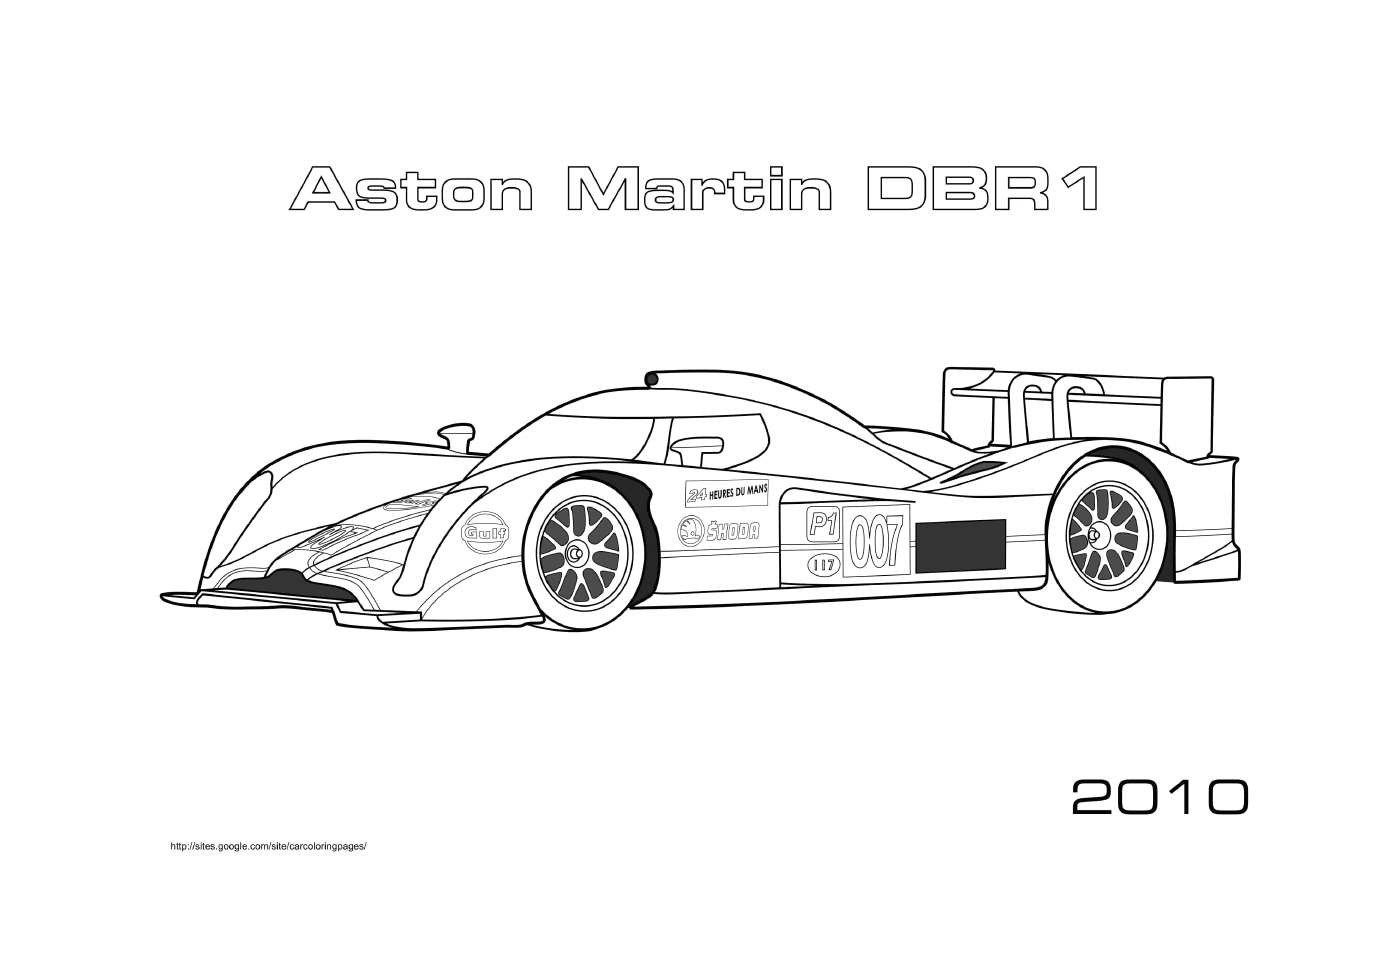  Aston Martin auto da corsa DBR1 2010 